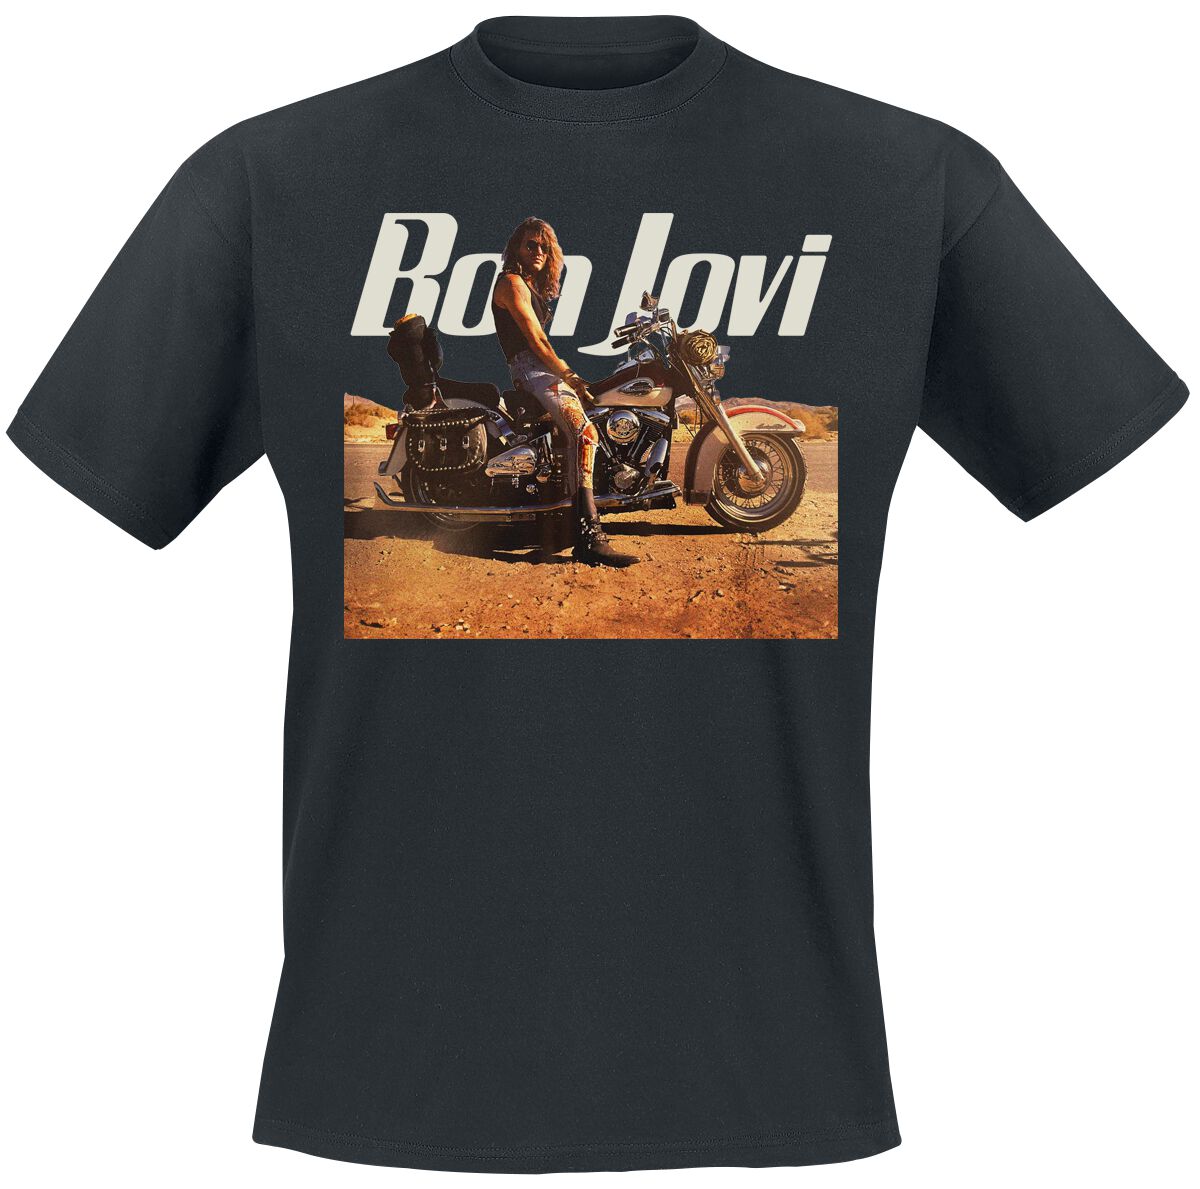 bon jovi t-shirt - wanted - s bis 3xl - fÃ¼r mÃ¤nner - grÃ¶ÃŸe 3xl - - lizenziertes merchandise! schwarz